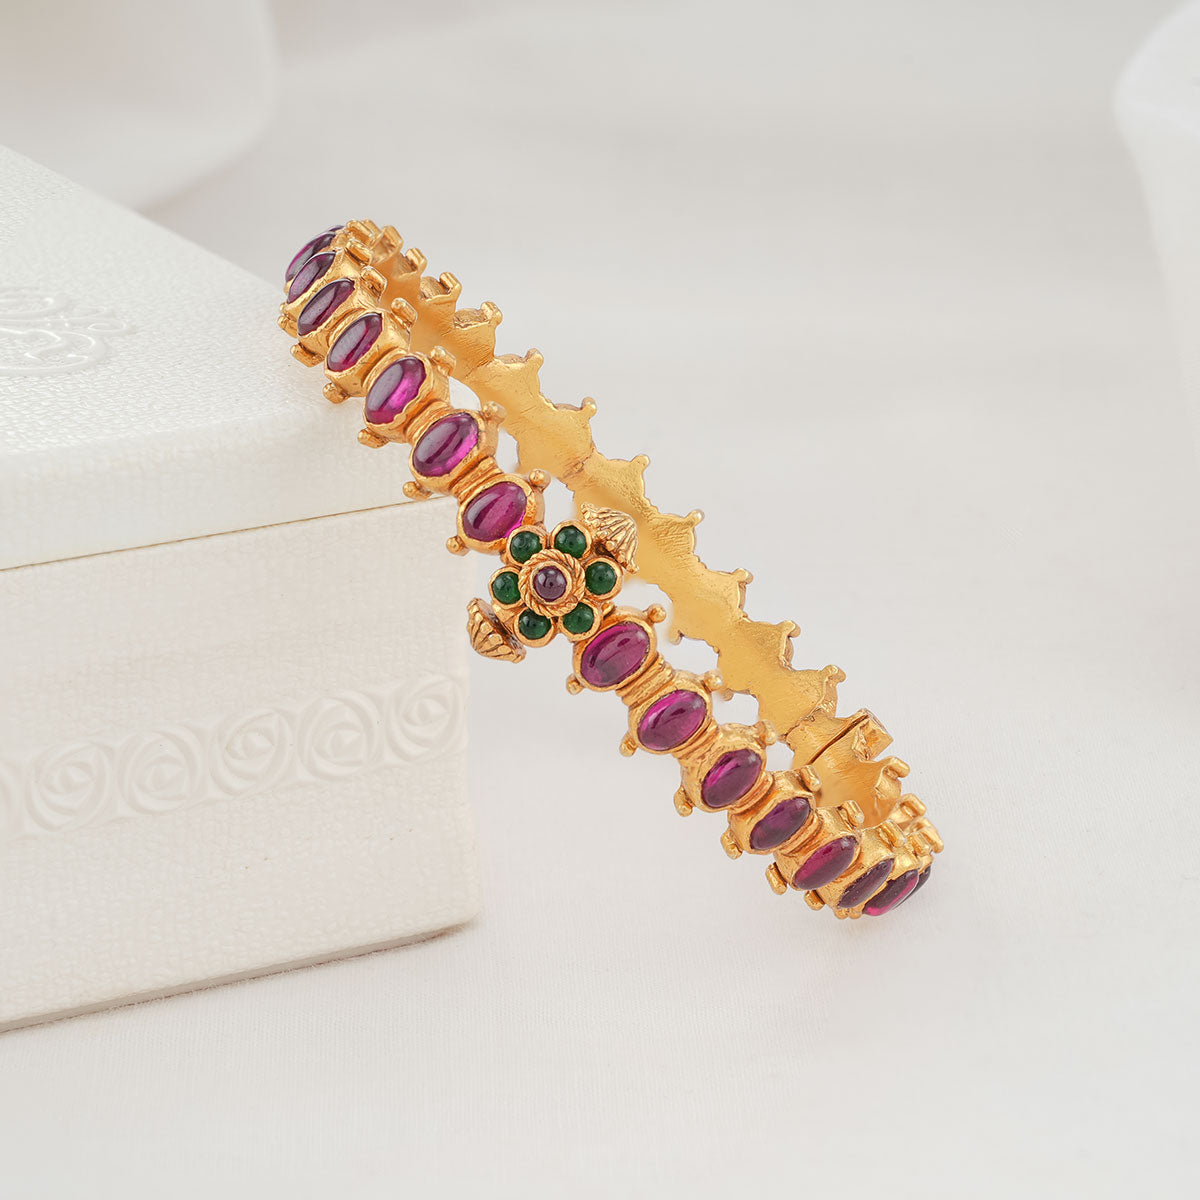 Buy Handmade Women Bracelet, Gemstone Bracelet, Adjustable Bracelet, Bridal  Shower Jewelry, Gift for Women, Gold Plated Bracelet Online in India - Etsy  | Handmade bracelets, Bridal shower jewelry, Gold plated bracelets